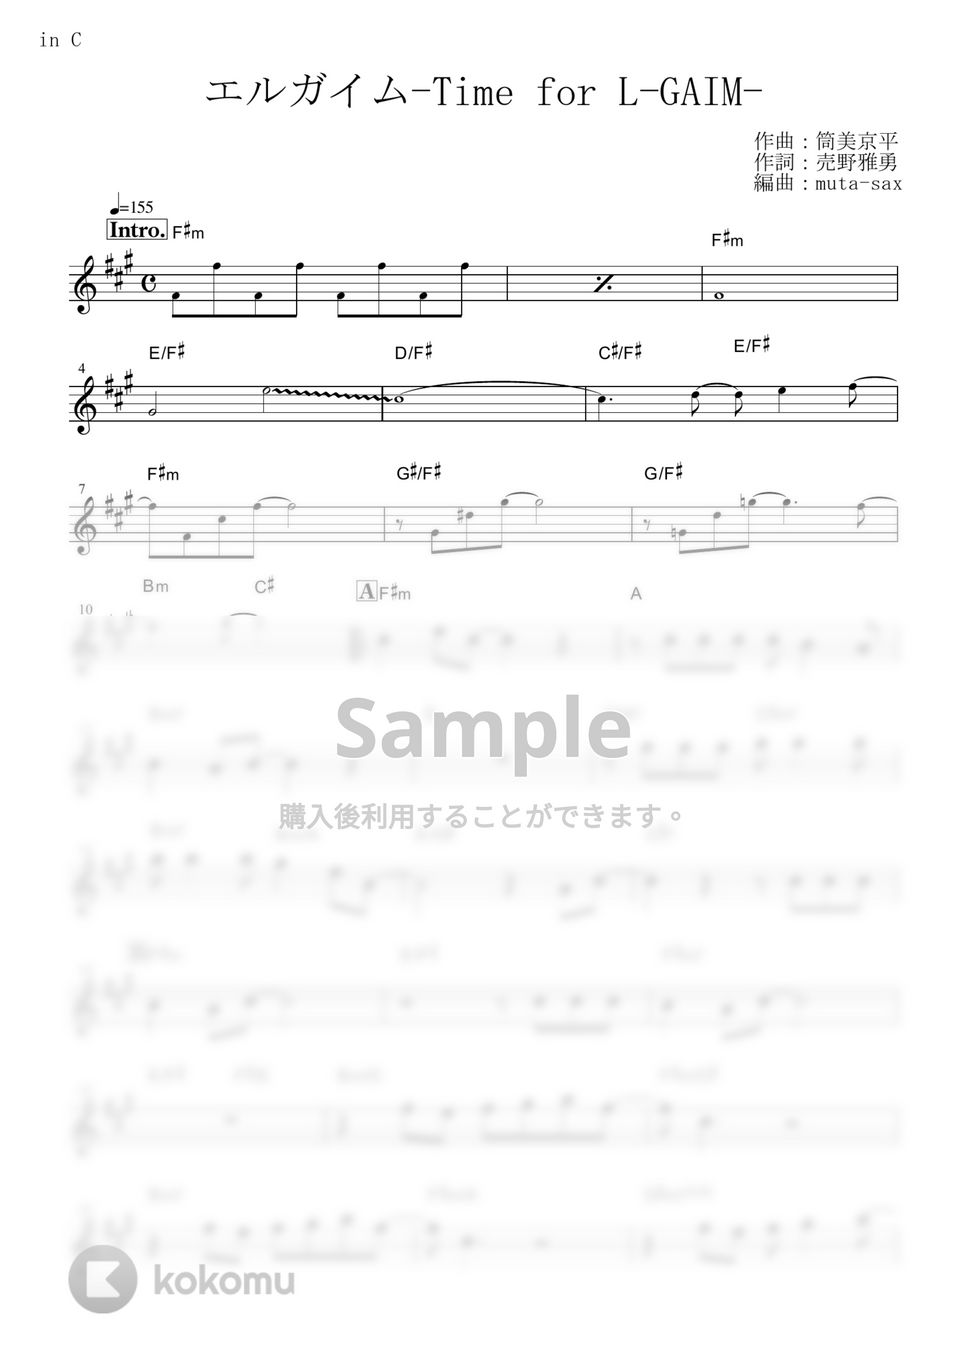 MIO - エルガイム-Time for L-GAIM- (『重戦機エルガイム』 / in C) by muta-sax